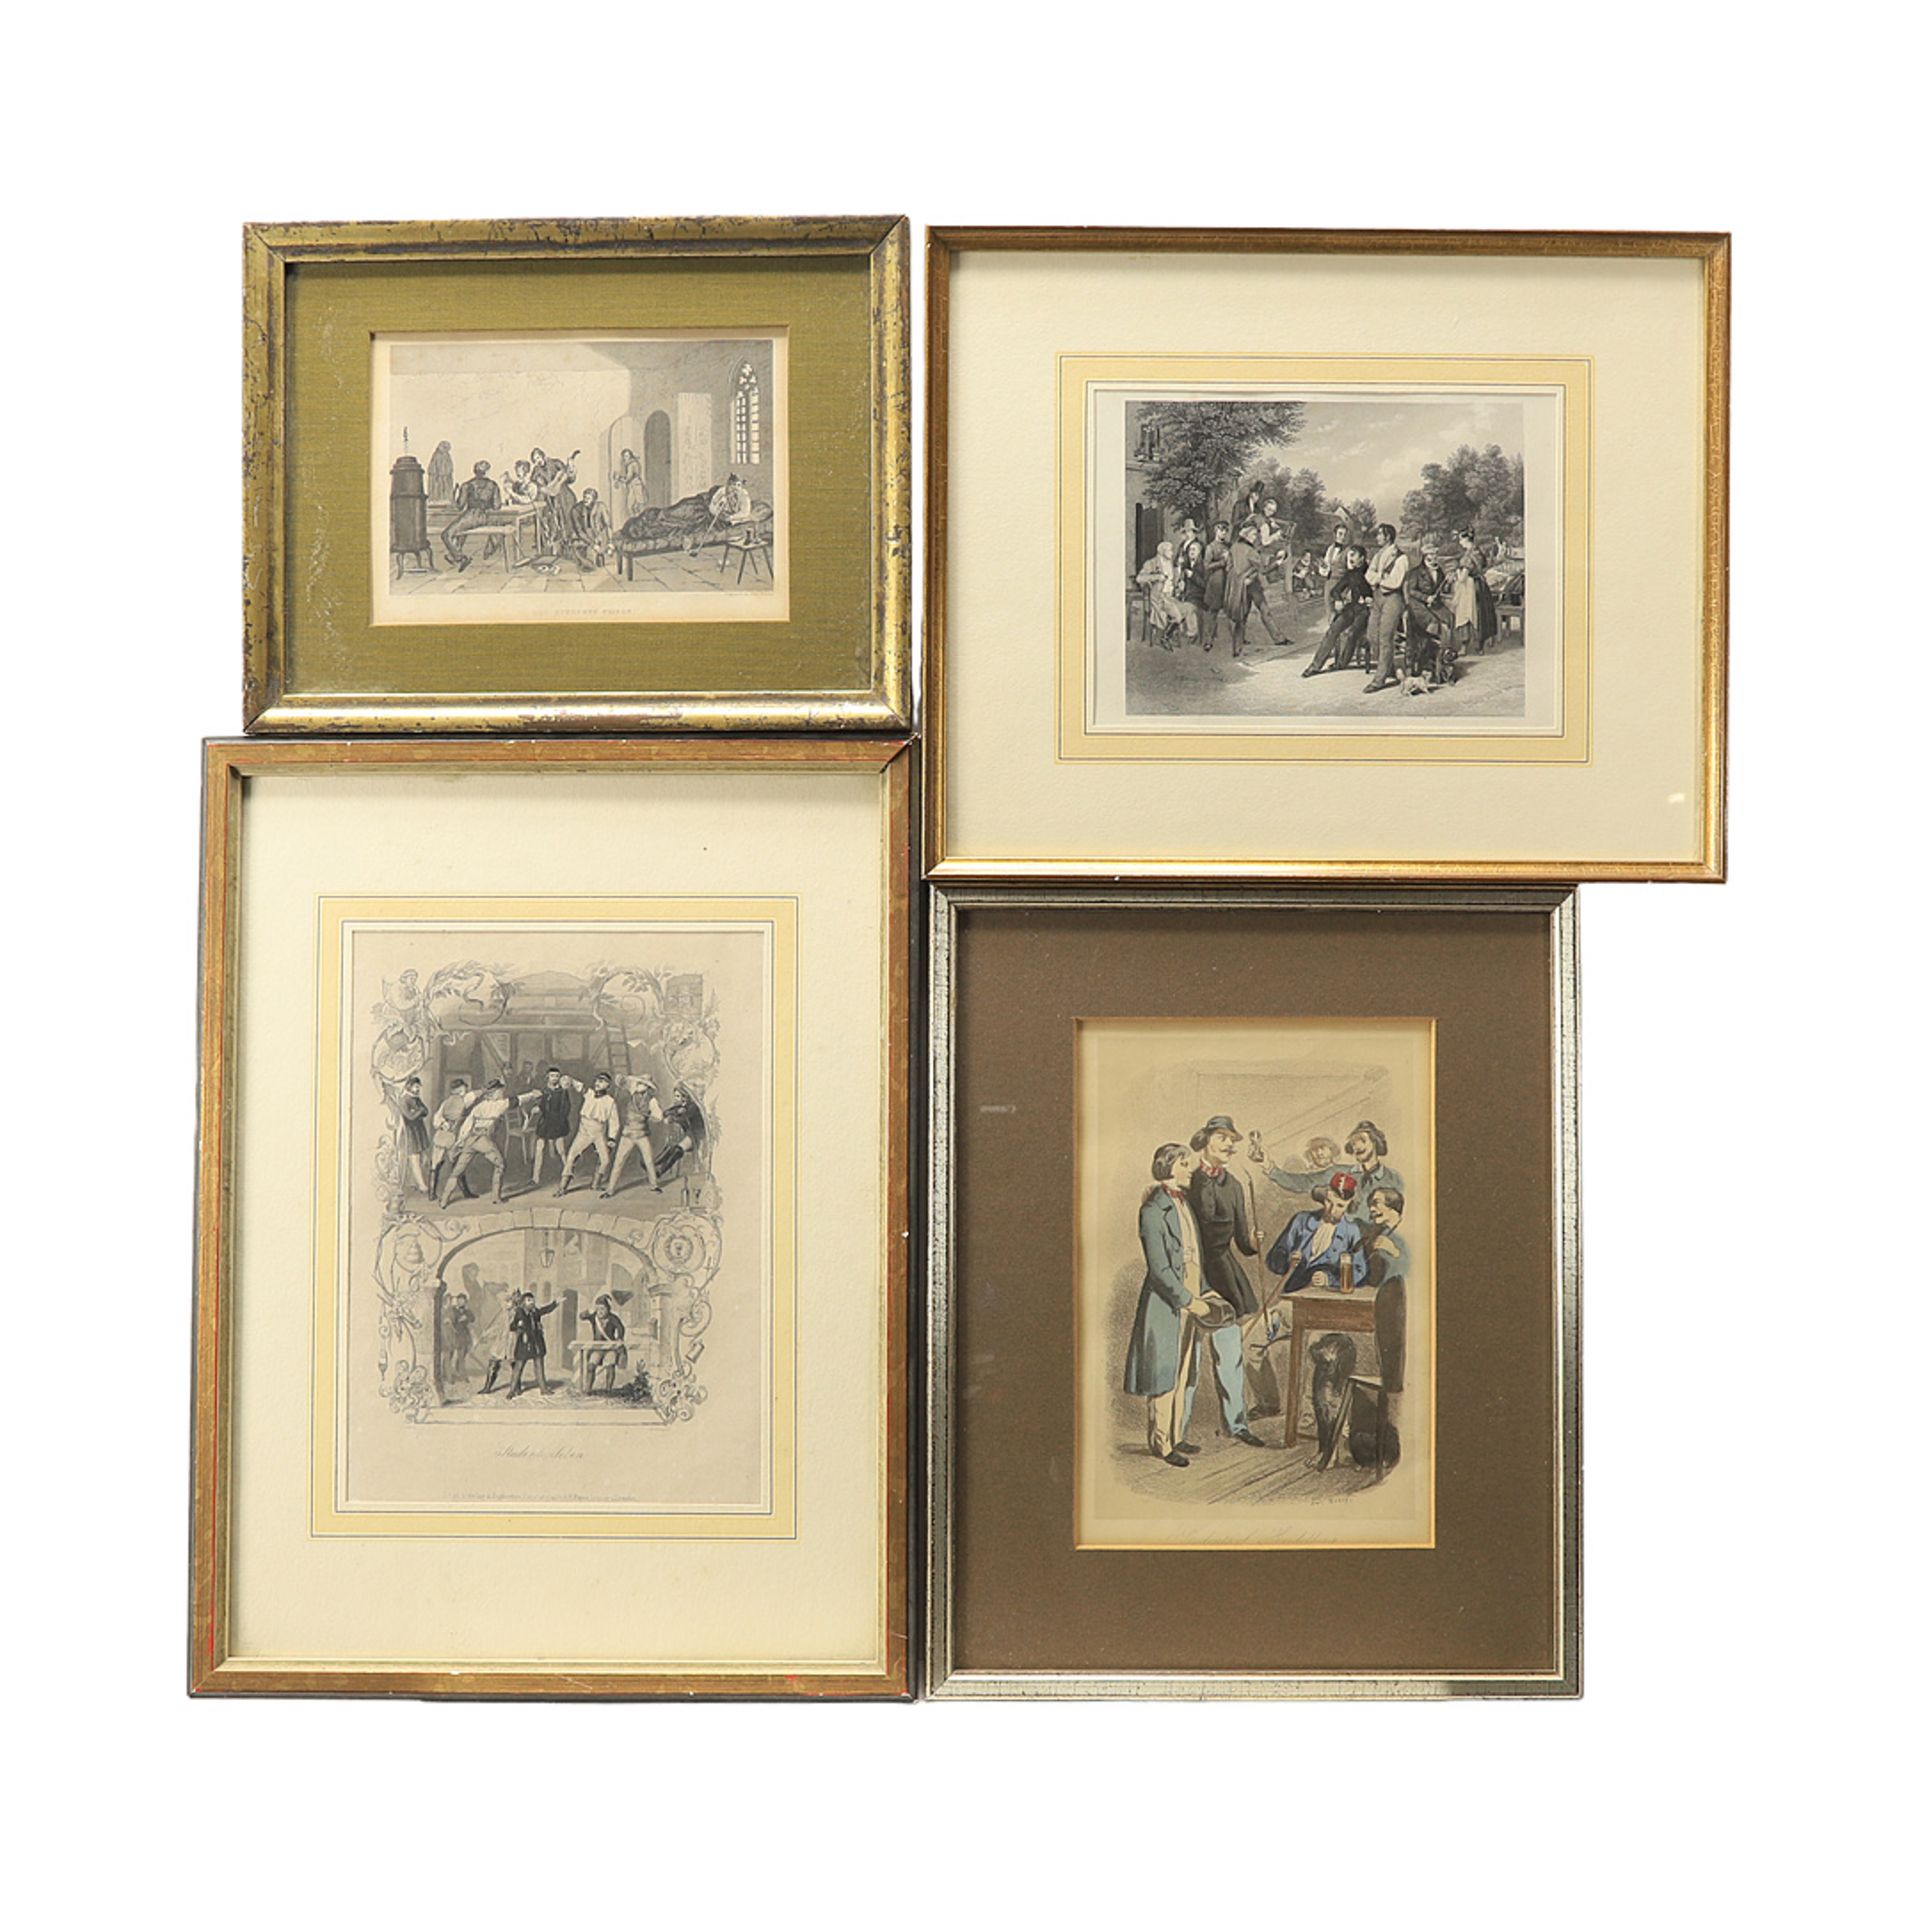 Studentica - Four prints, 19th century